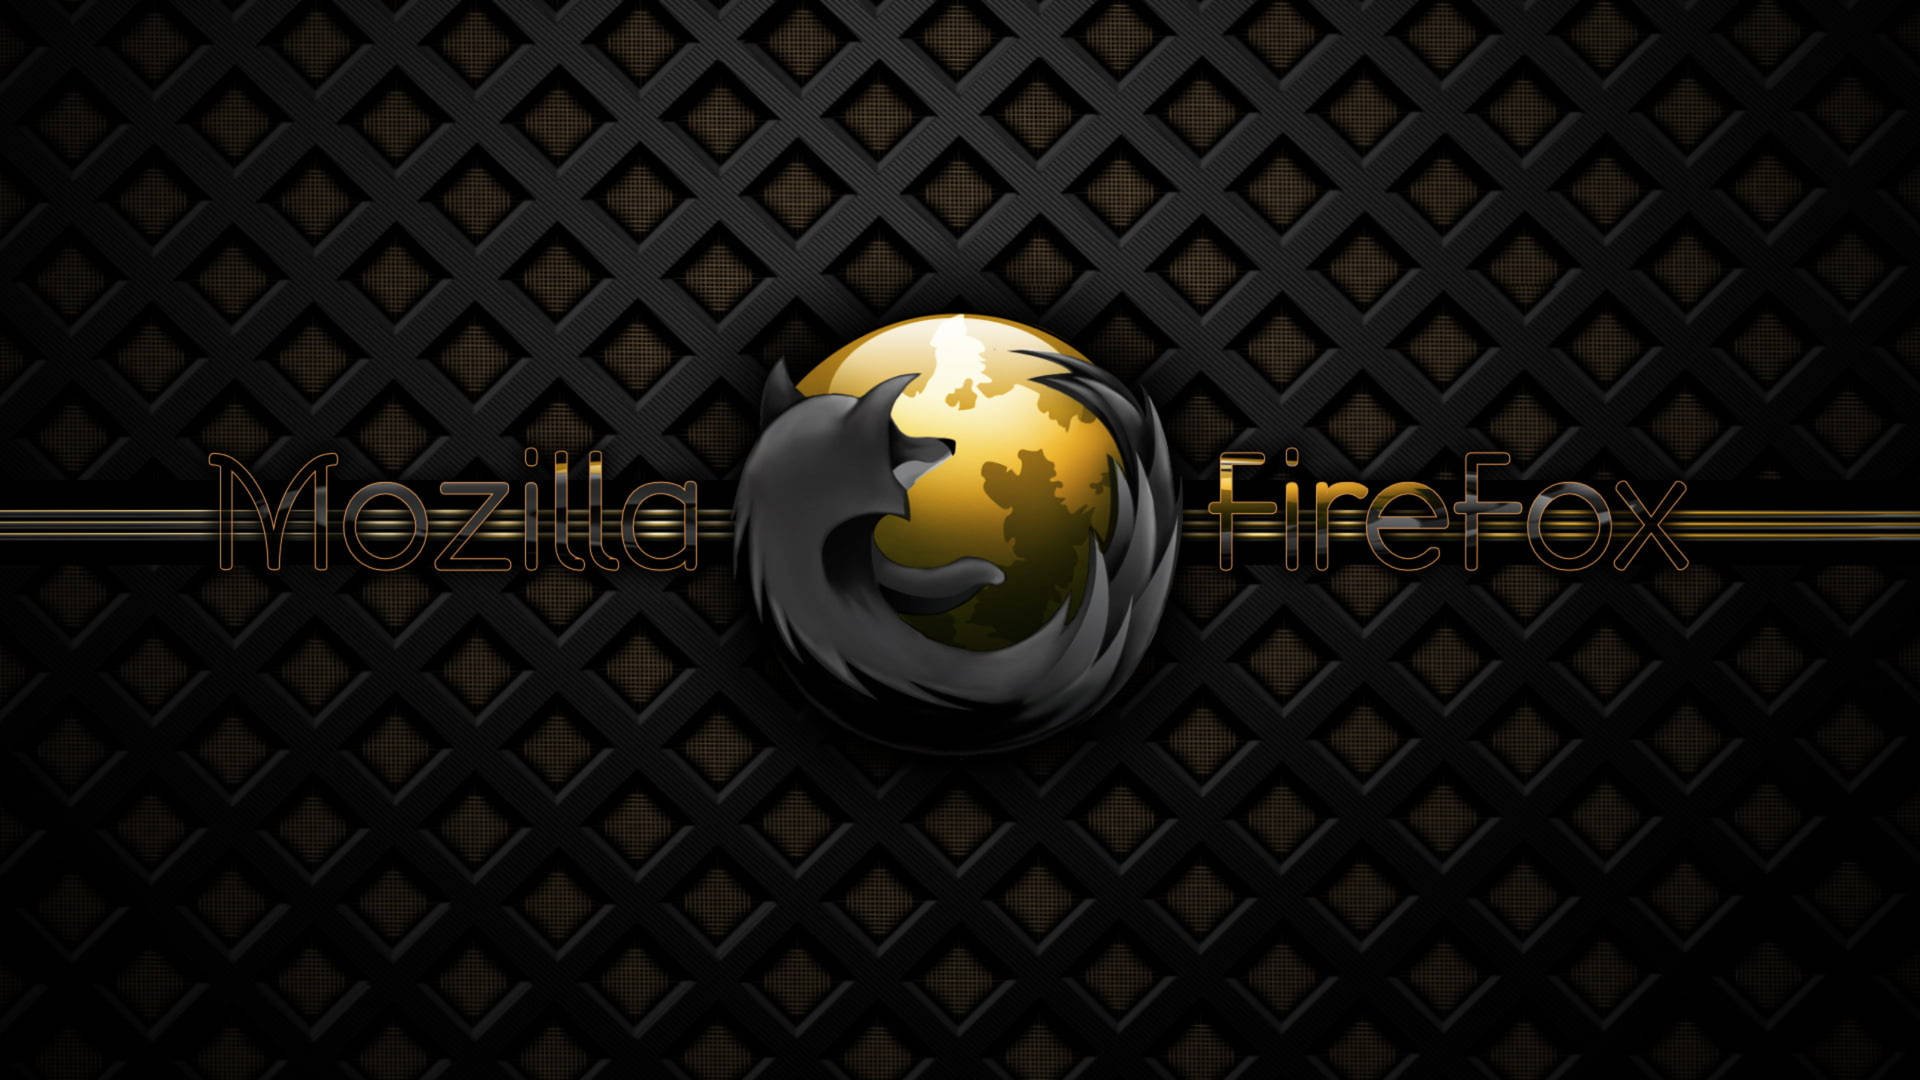 Mozillafirefox En Negro Y Oro. Fondo de pantalla